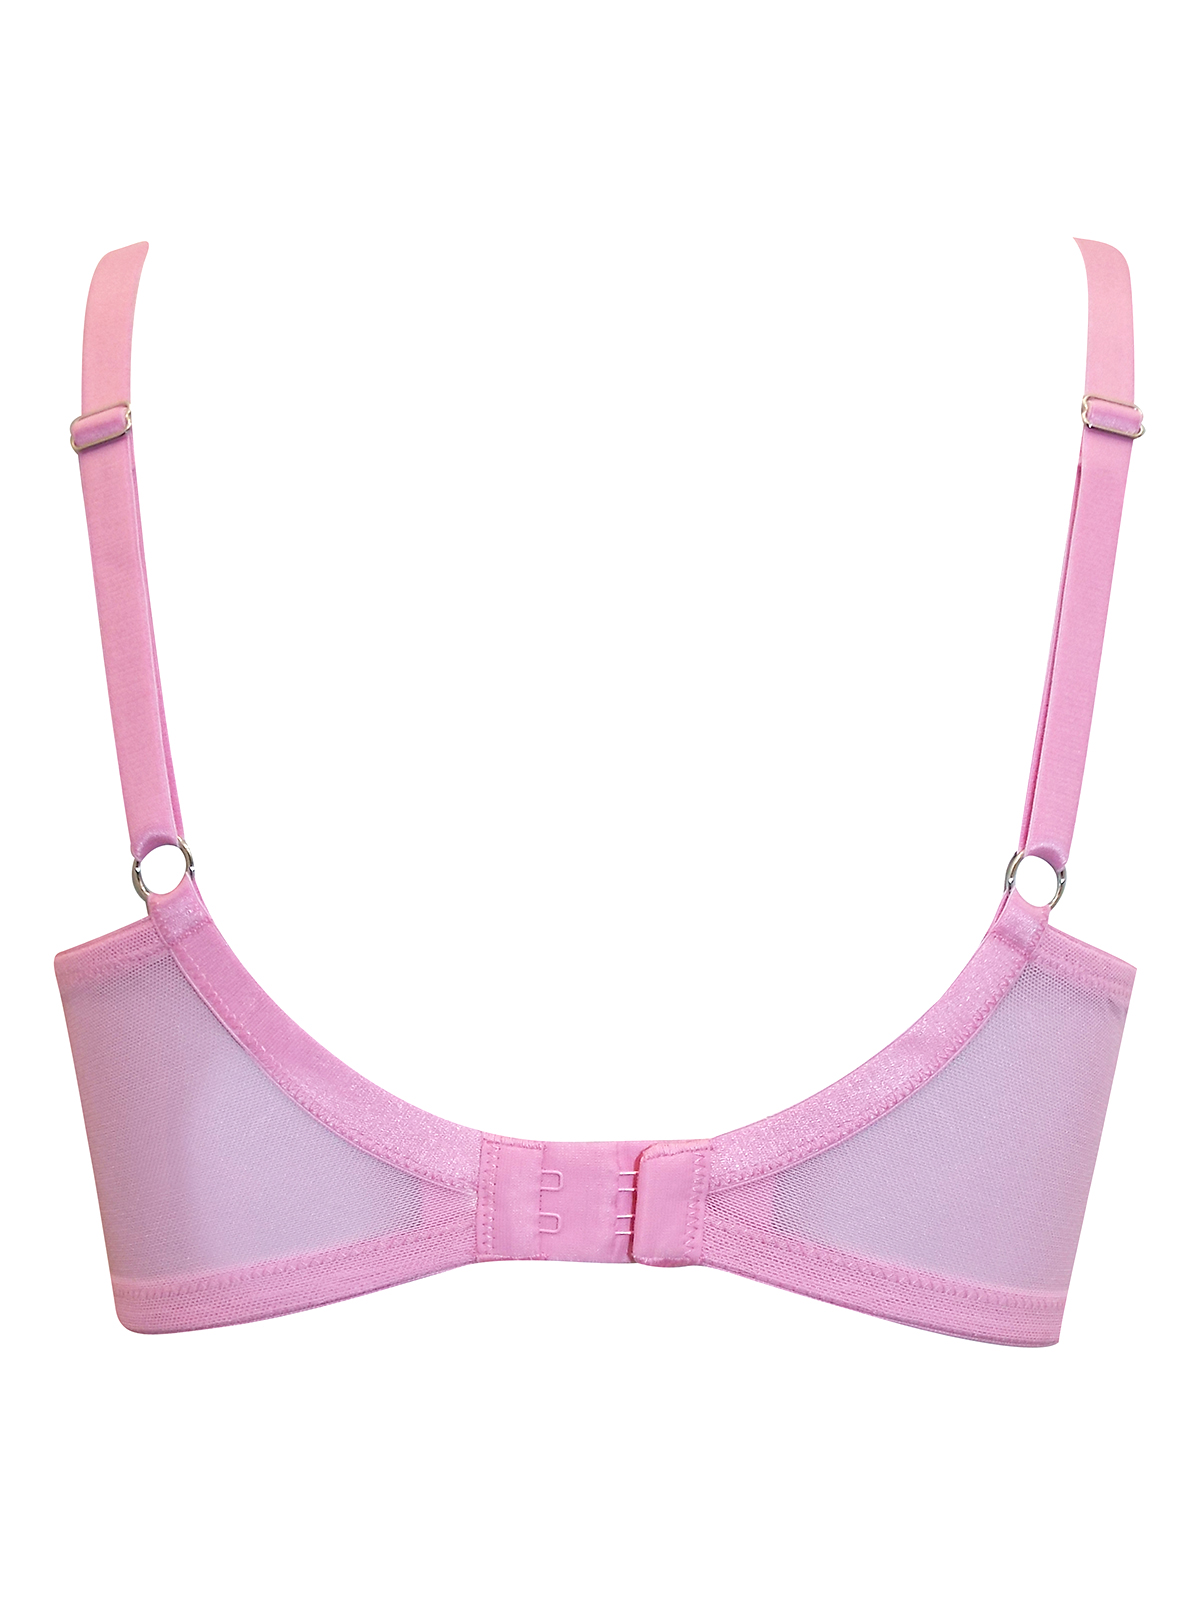 Balconette bra Color hot pink - SINSAY - 8313F-42X